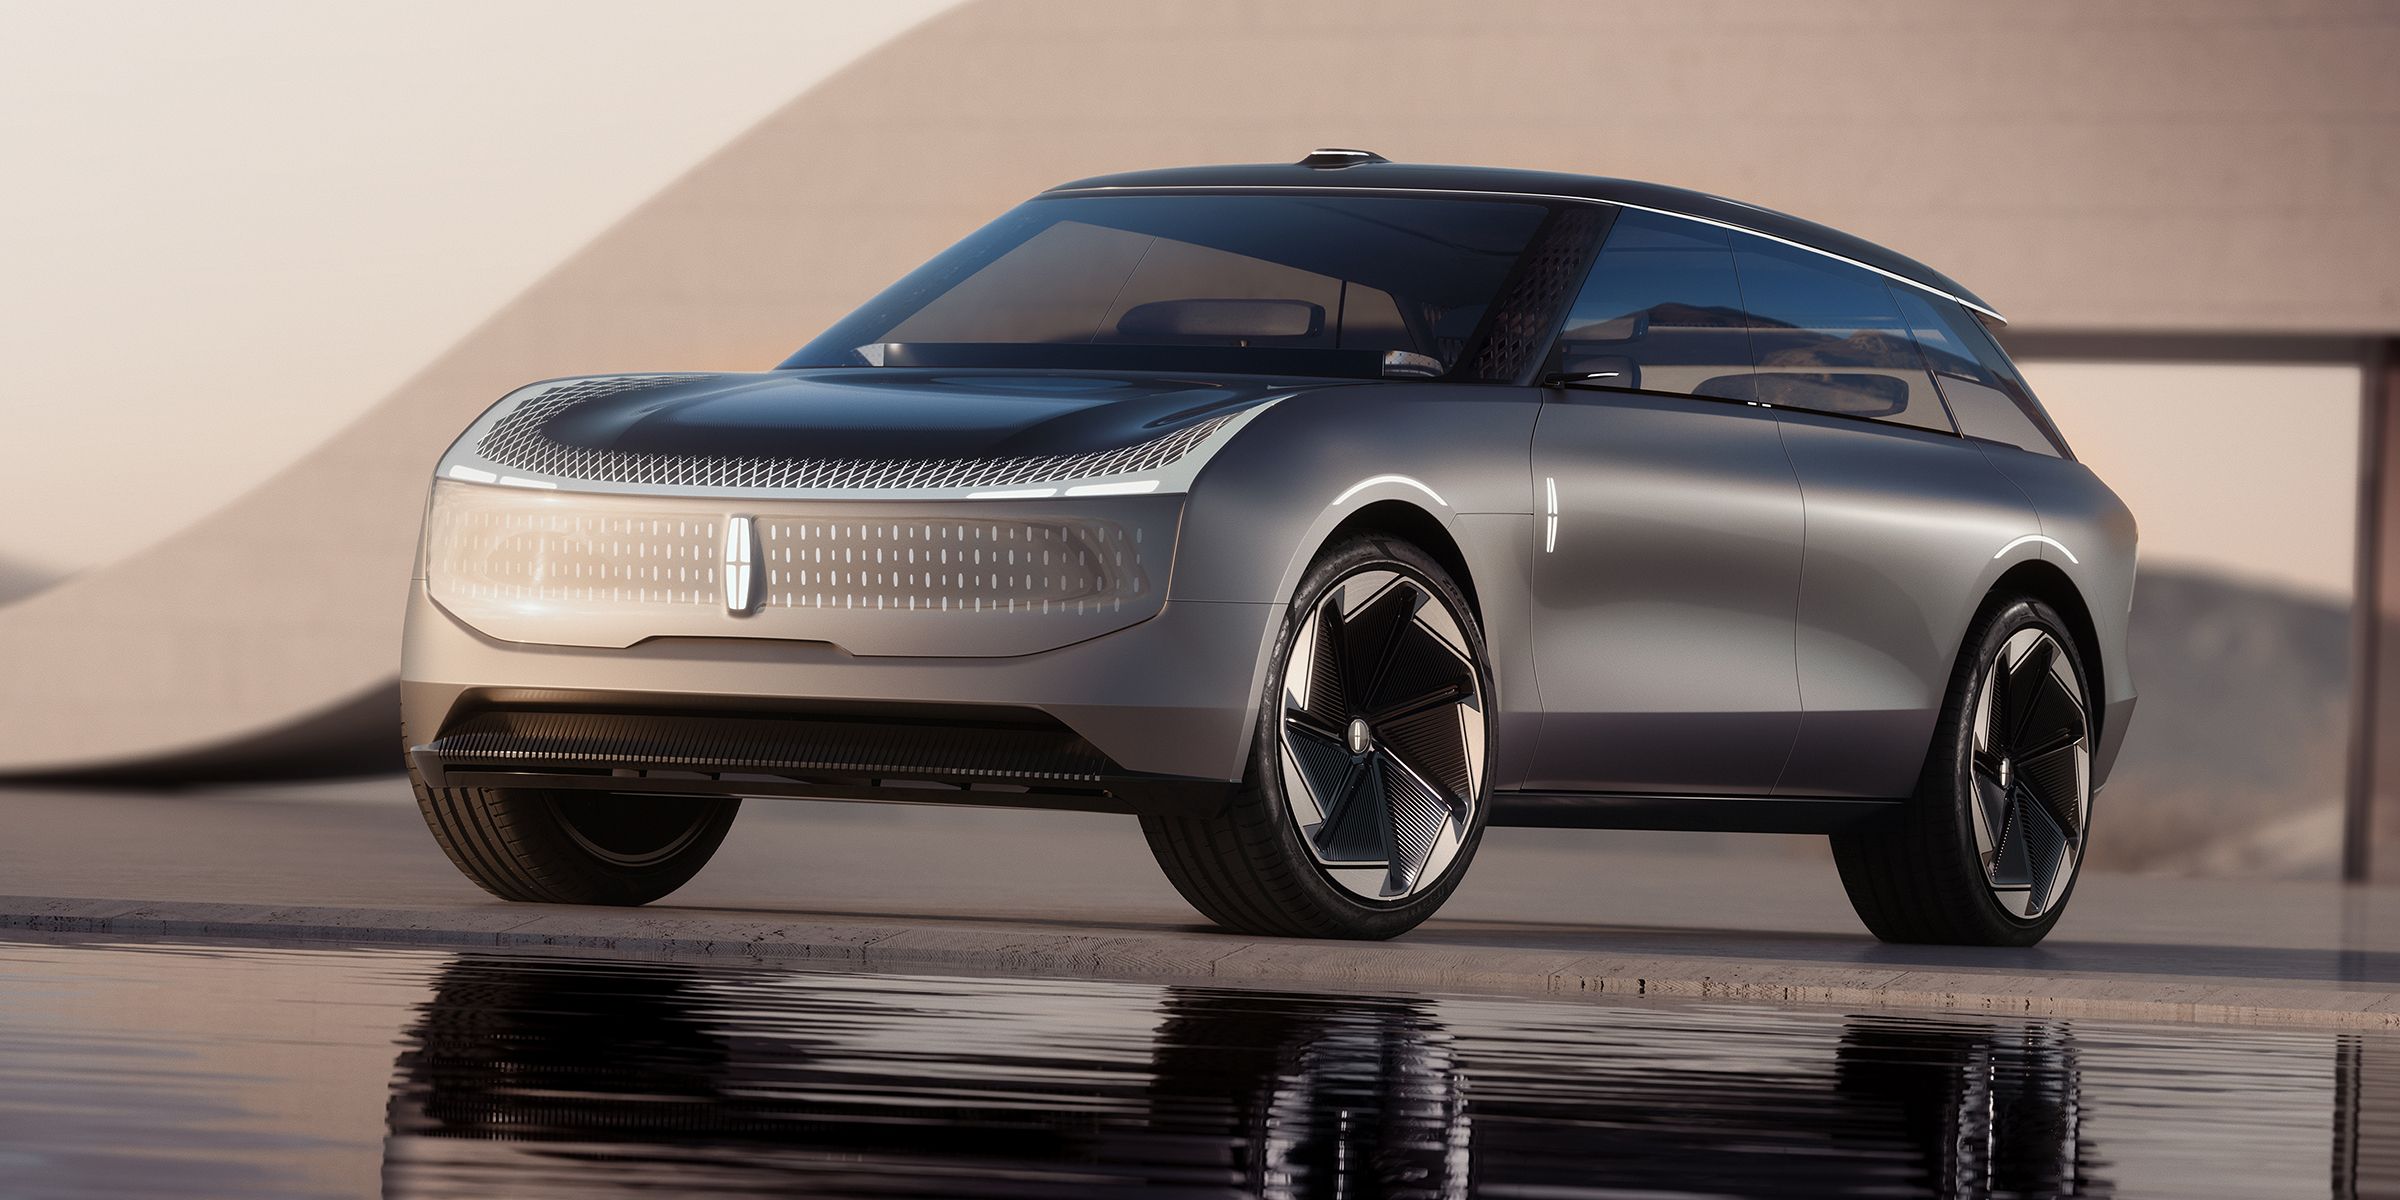 The Lincoln Star Concept Shows a Wild Future for Lincoln